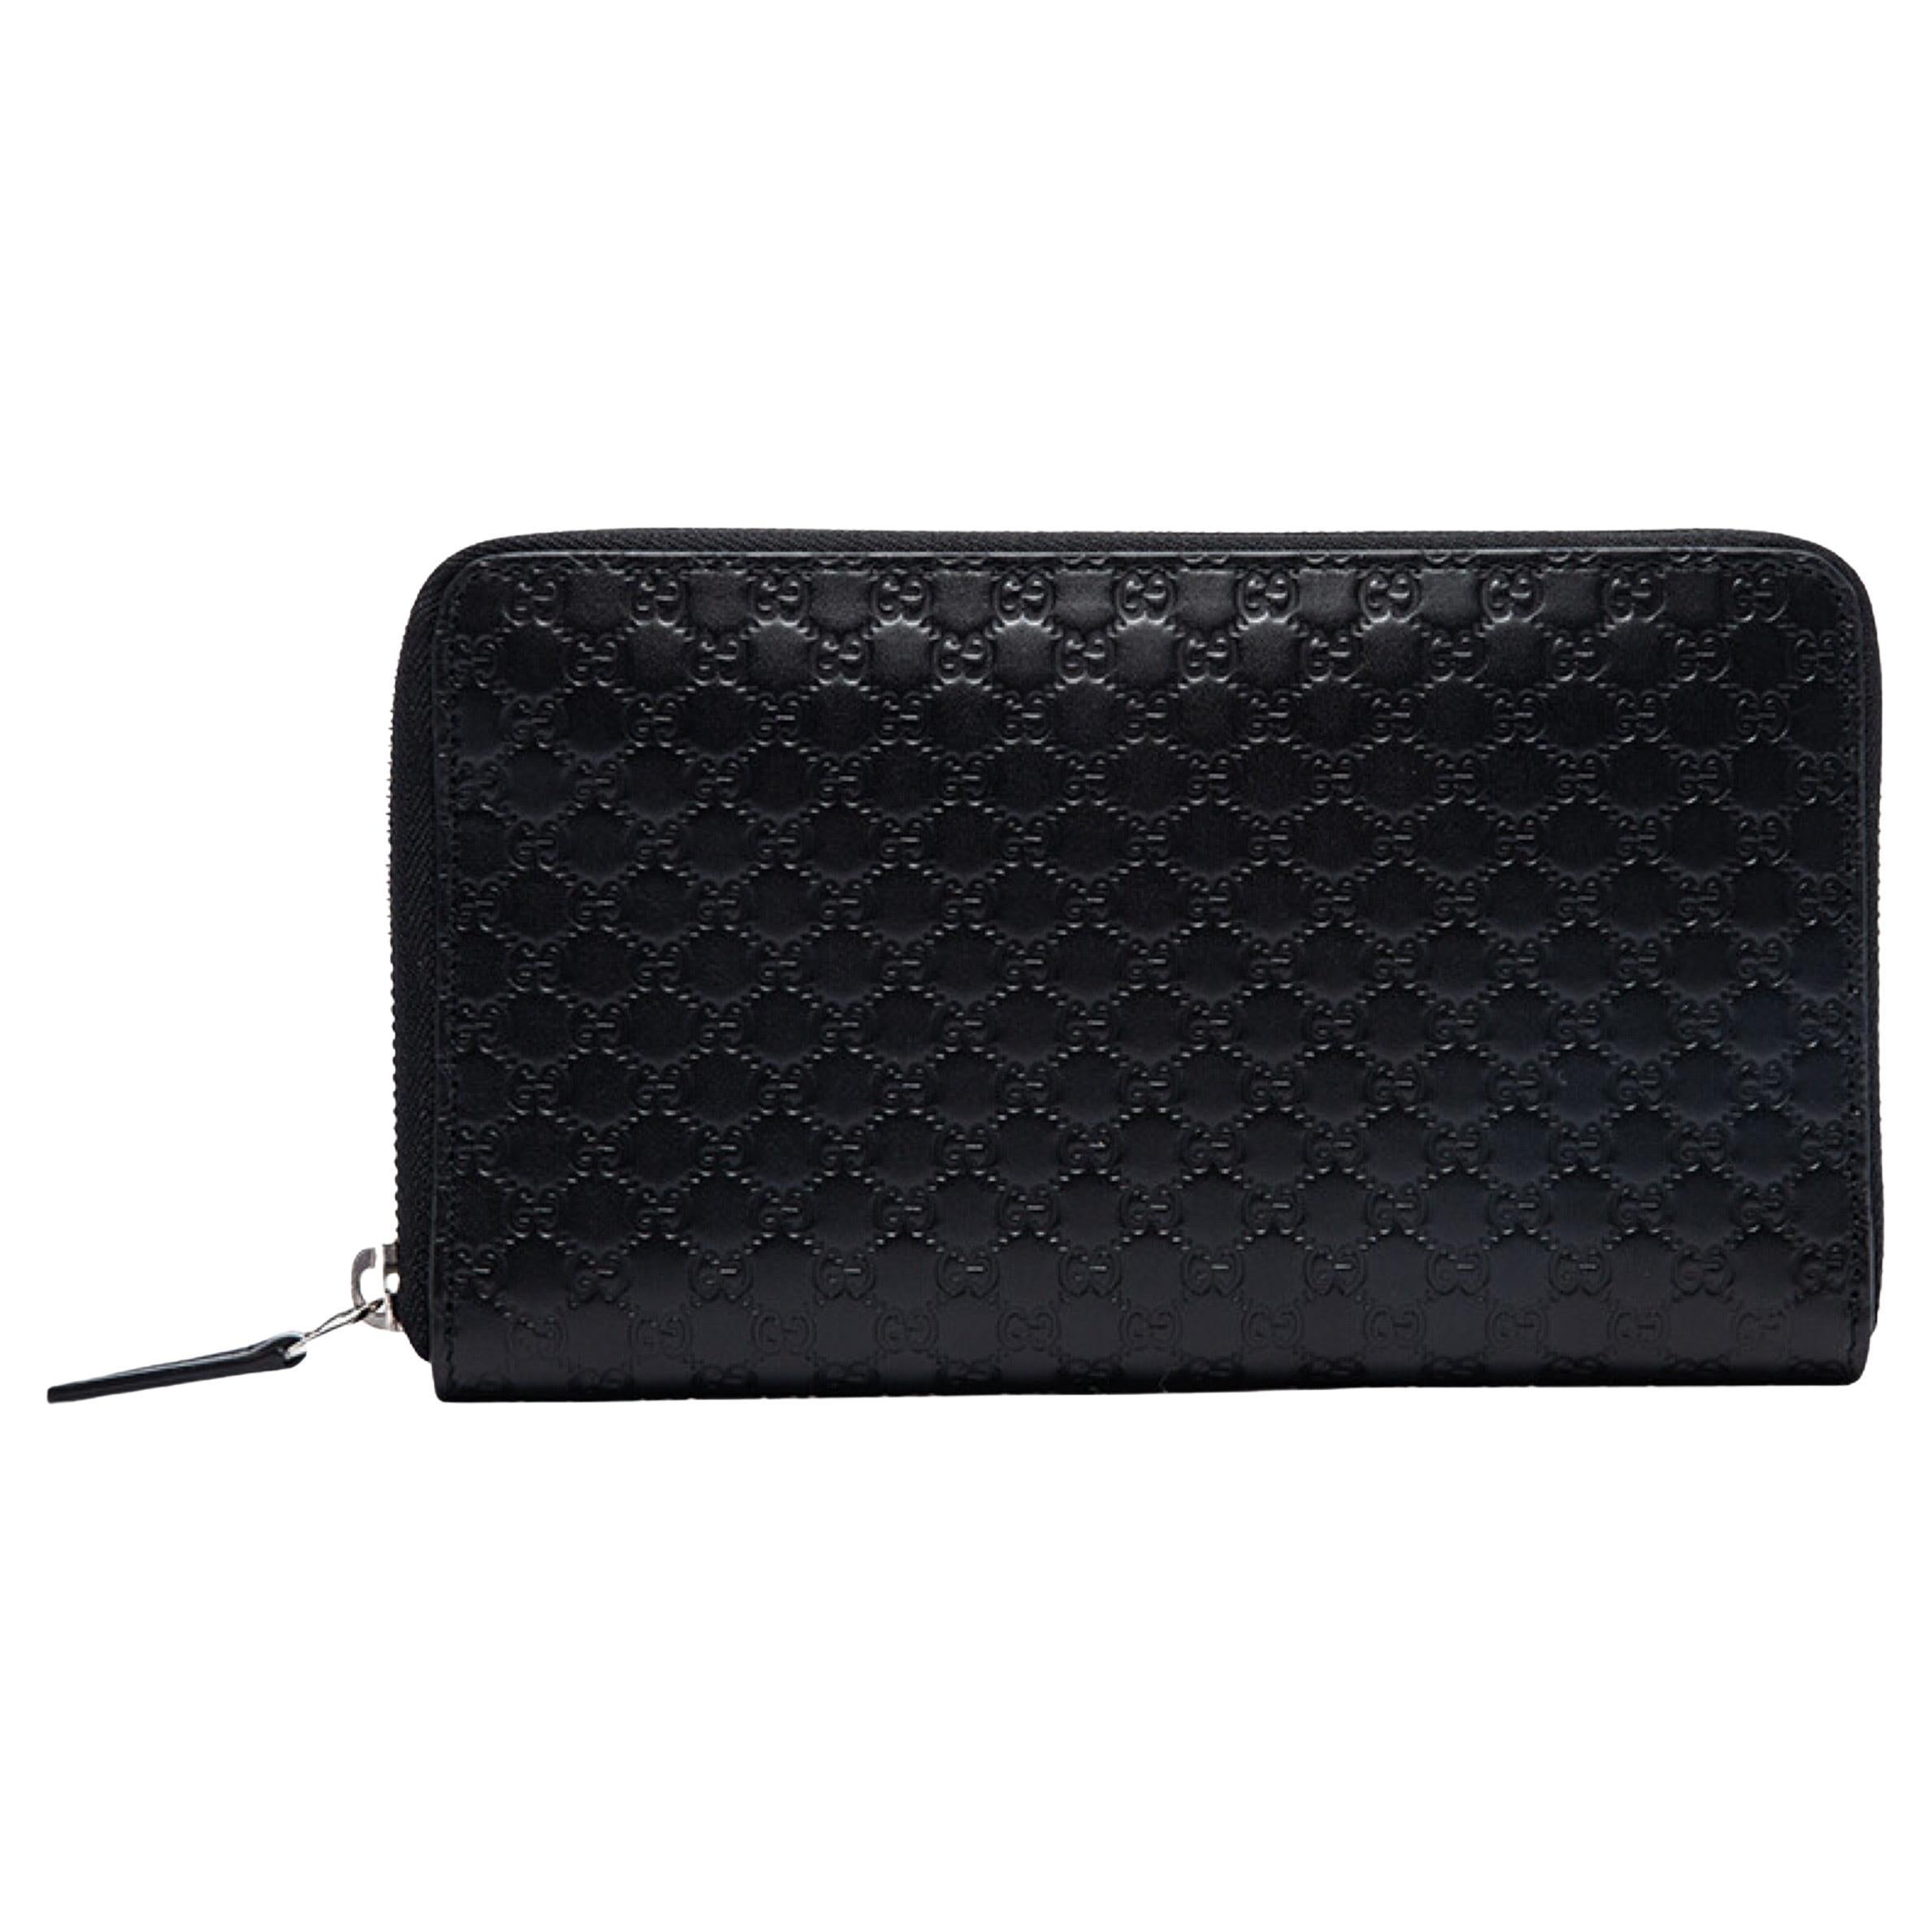 NEW Gucci Black GG Guccissima Monogram Leather Zip Around Clutch Bag For Sale